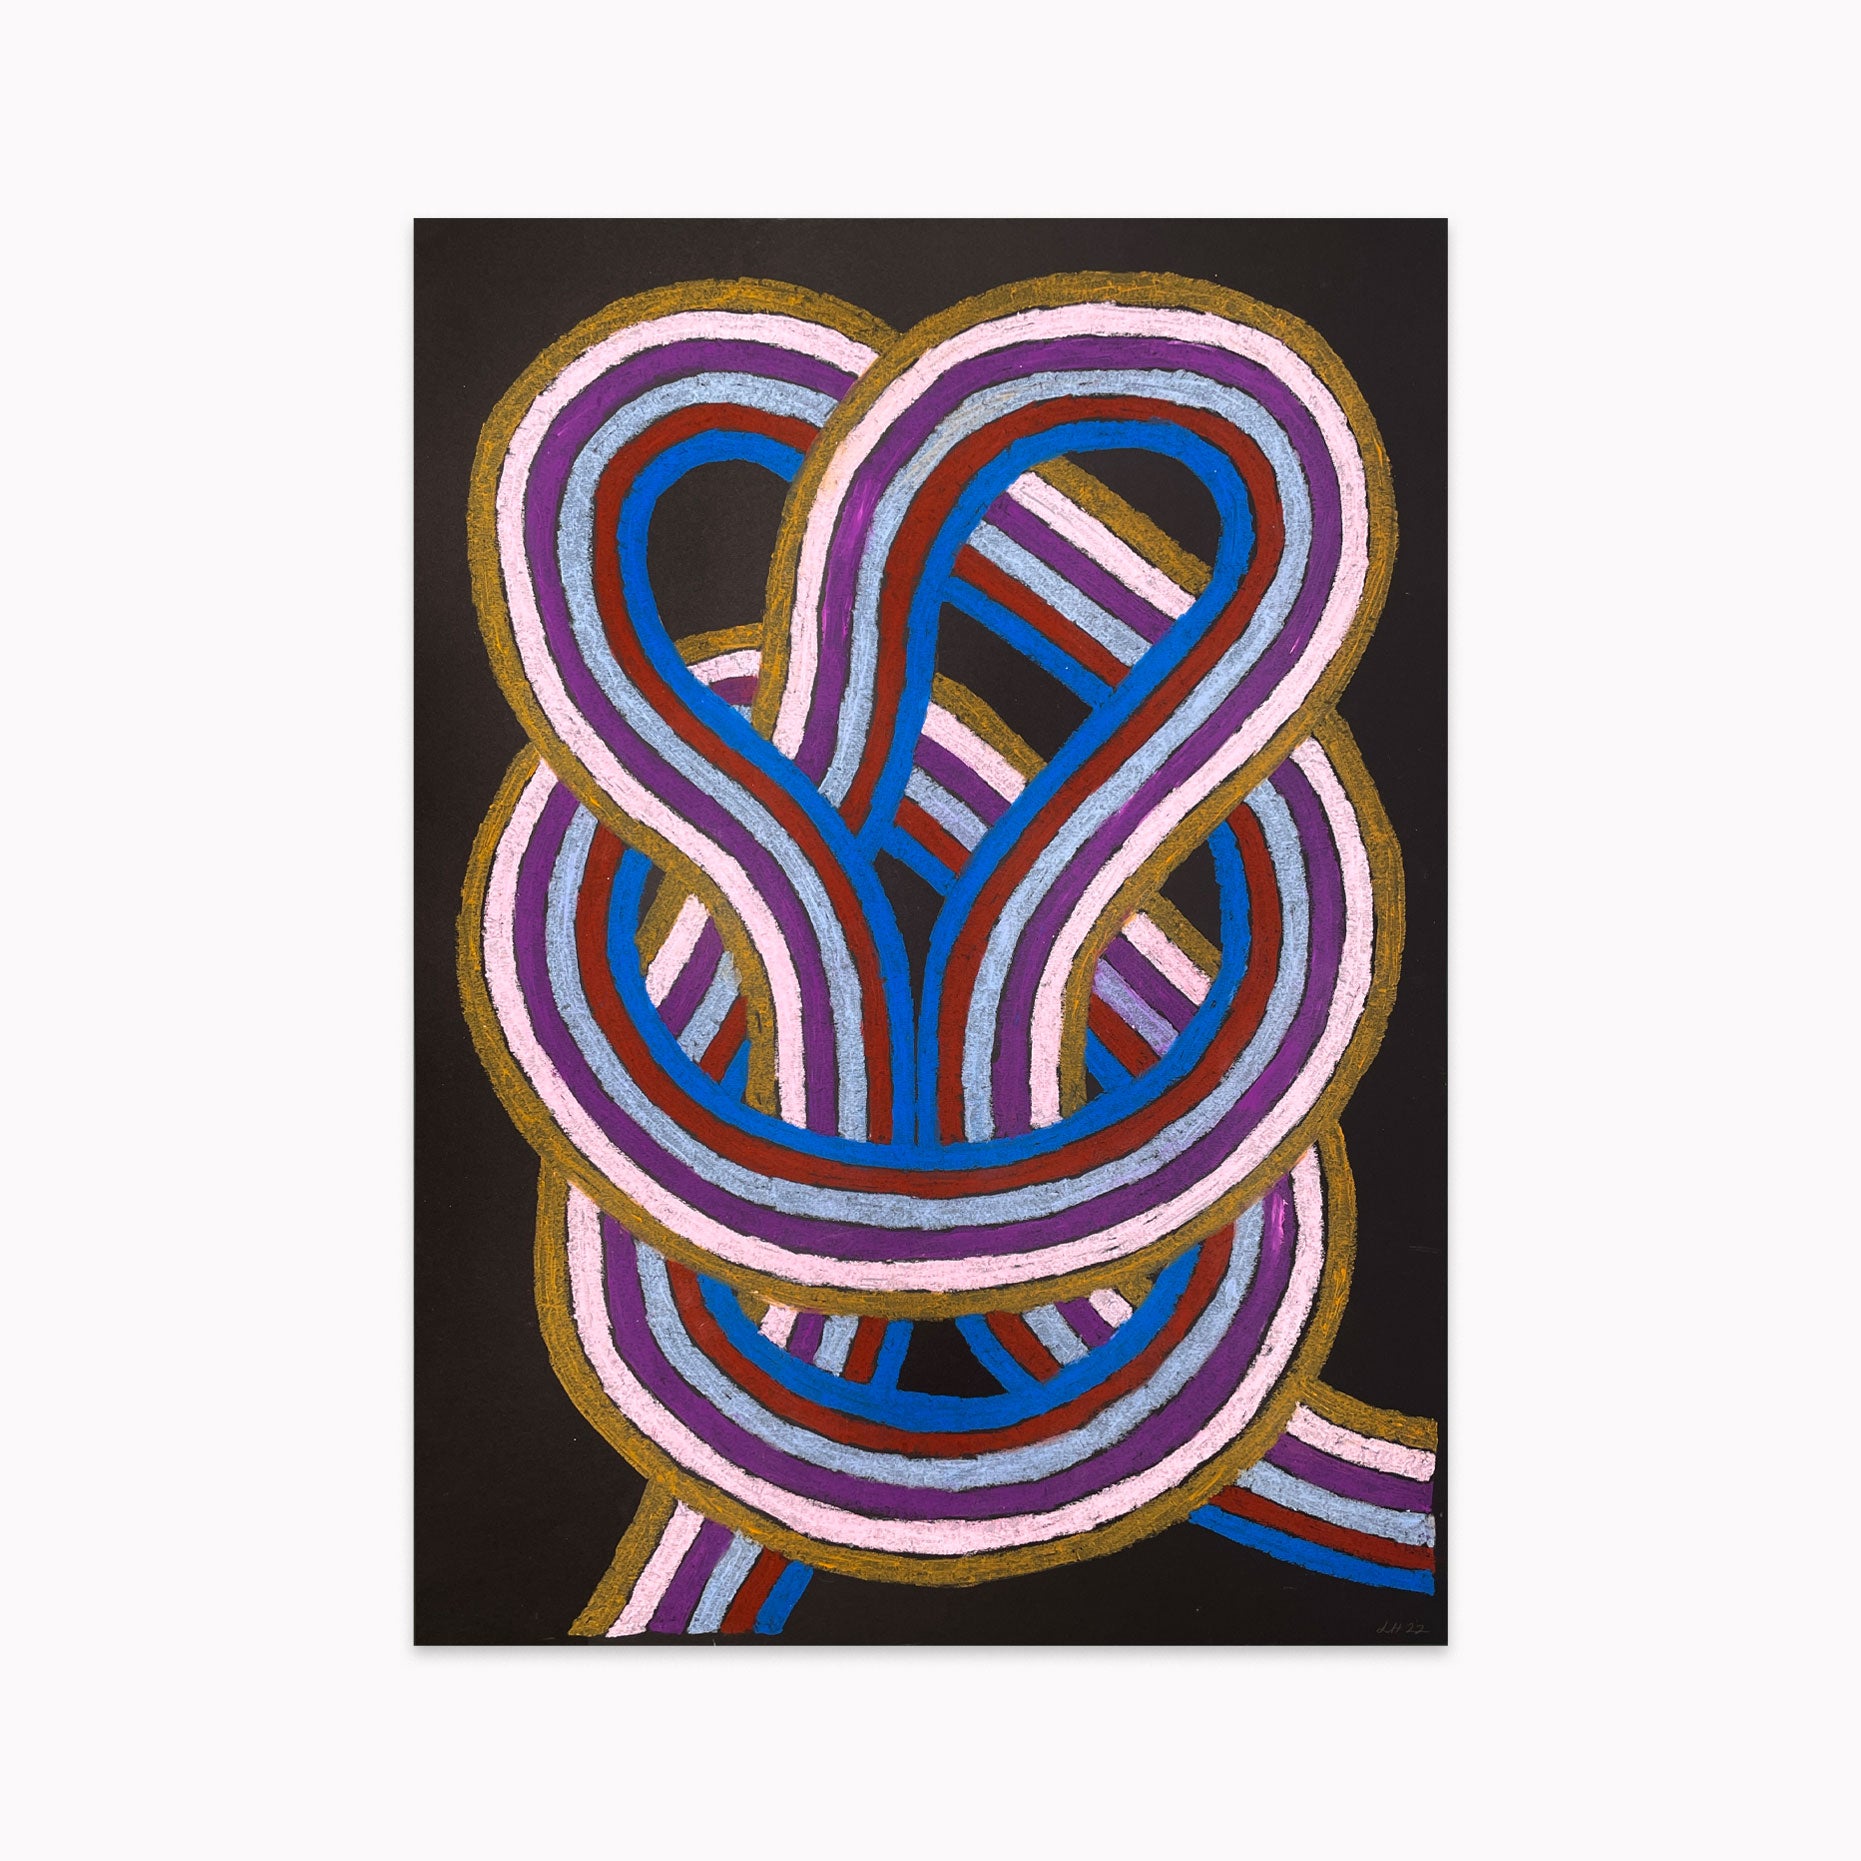 Linn Henrichson » Bowline » Oil stick artwork